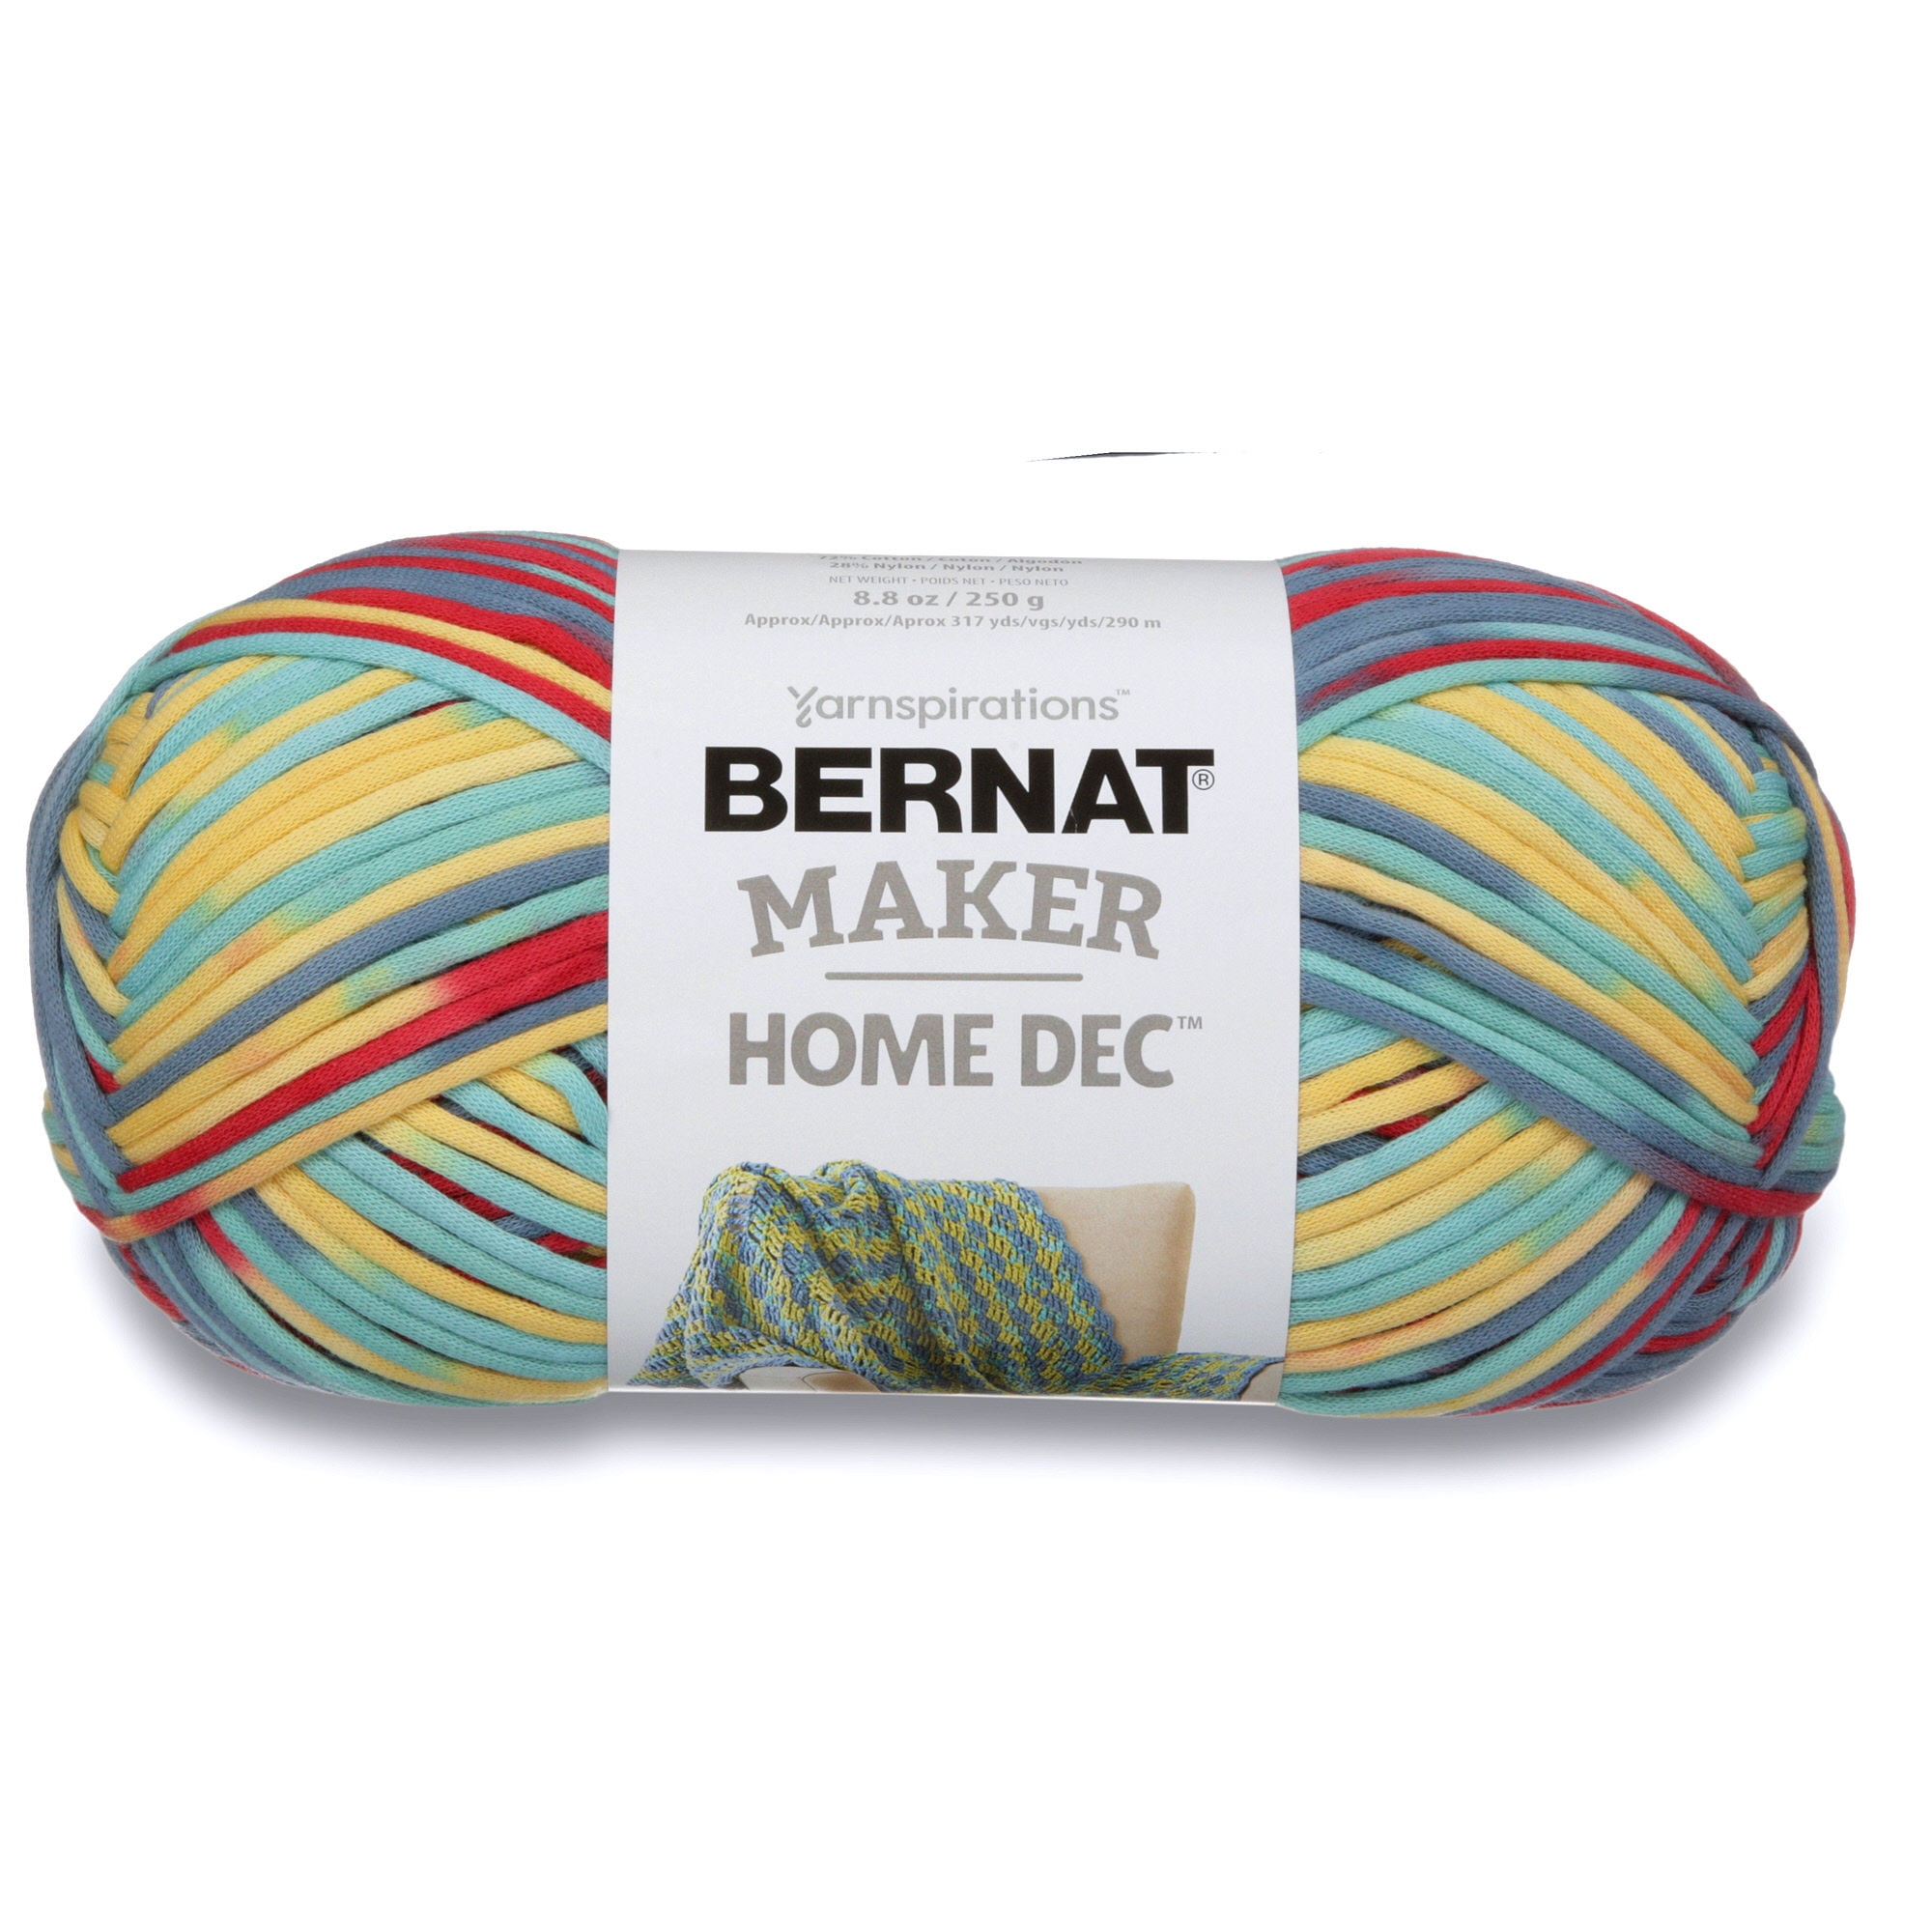 Bernat Maker Home Dec Yarn Review with Moogly! 